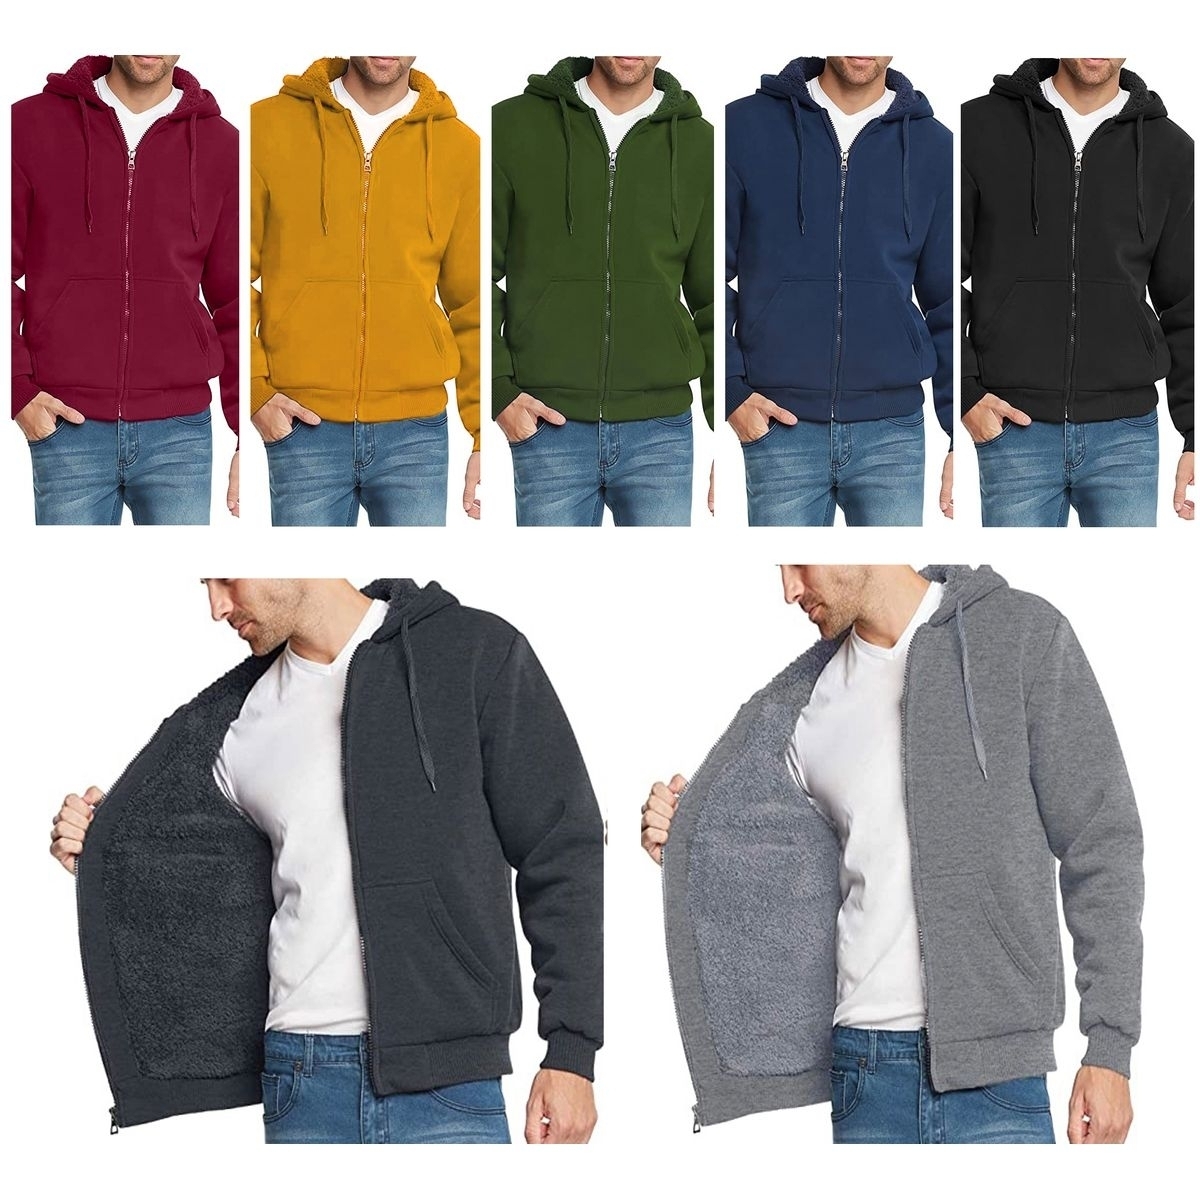 Men's Heavyweight Sherpa Lined Fleece Zip-Up Hoodie Sweater Jacket - Navy, Small